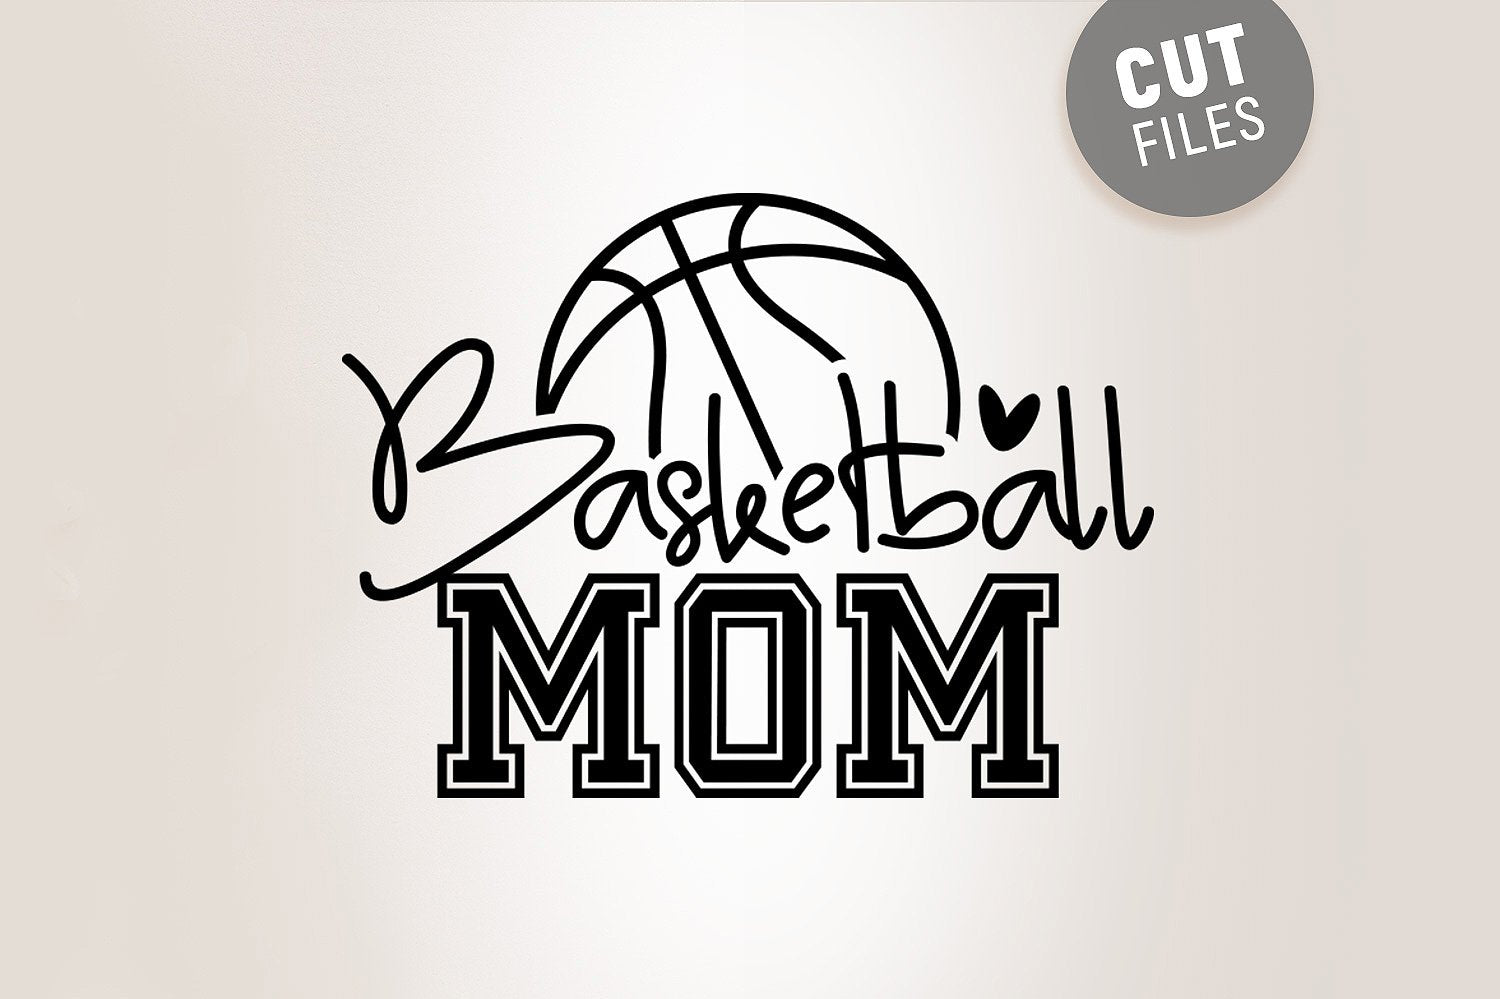 Basketball Mom Svg Cut File